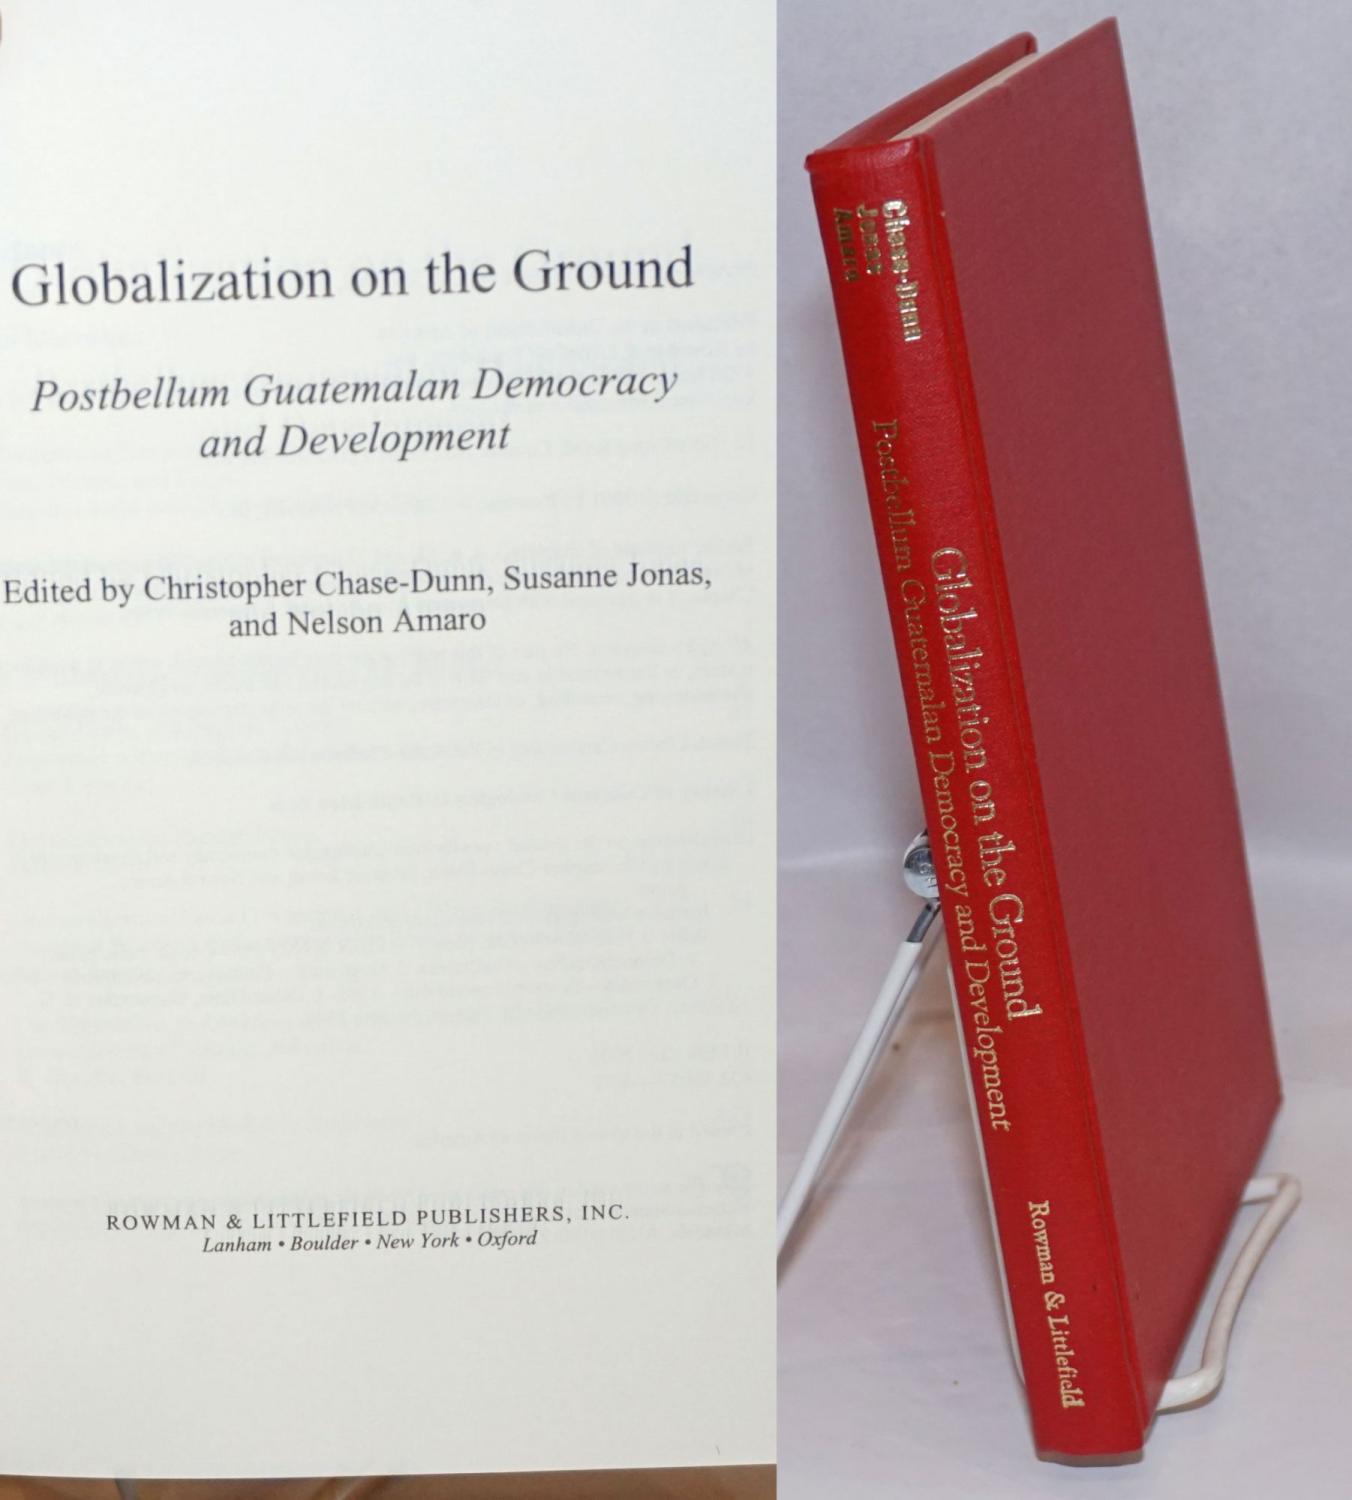 Globalization on the Ground: Postbellum Guatemalan Democracy and Development - Chase-Dunn, Christopher, Susanne Jonas, and Nelson Amaro, editors